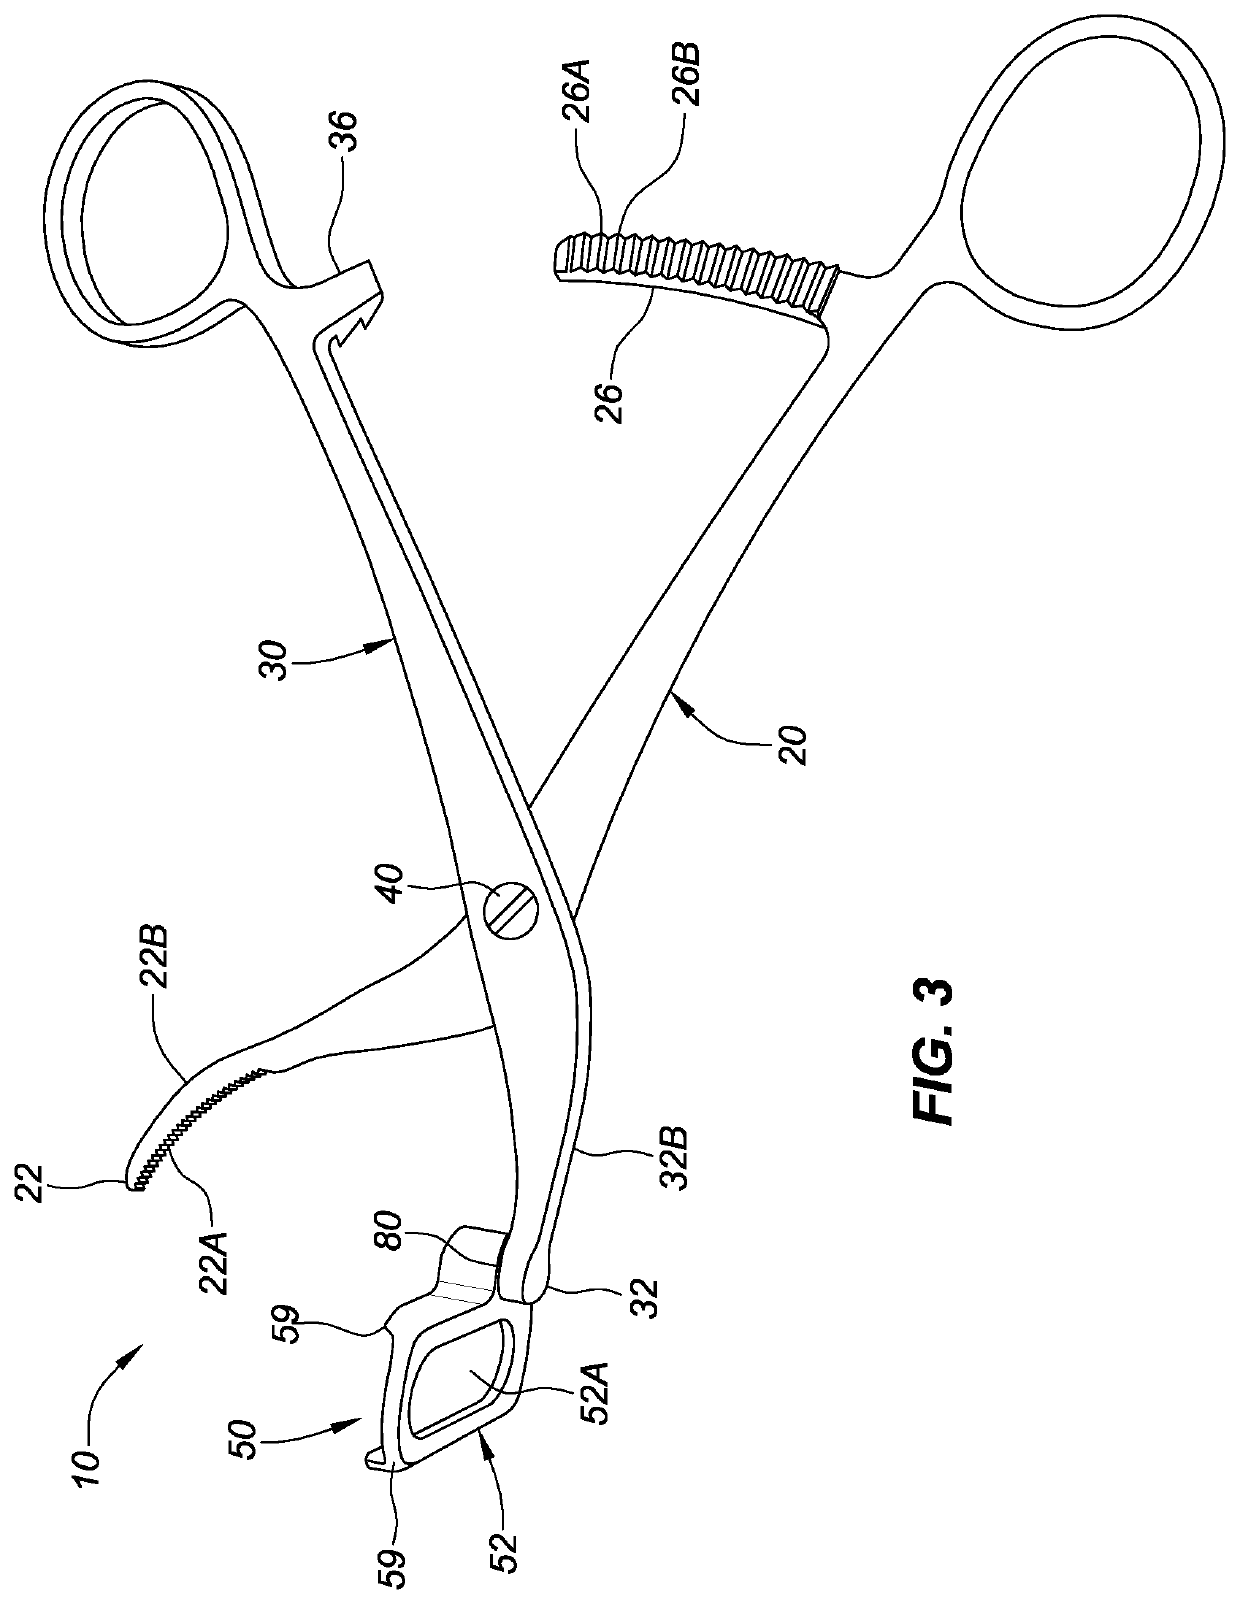 Modular orthopedic clamps